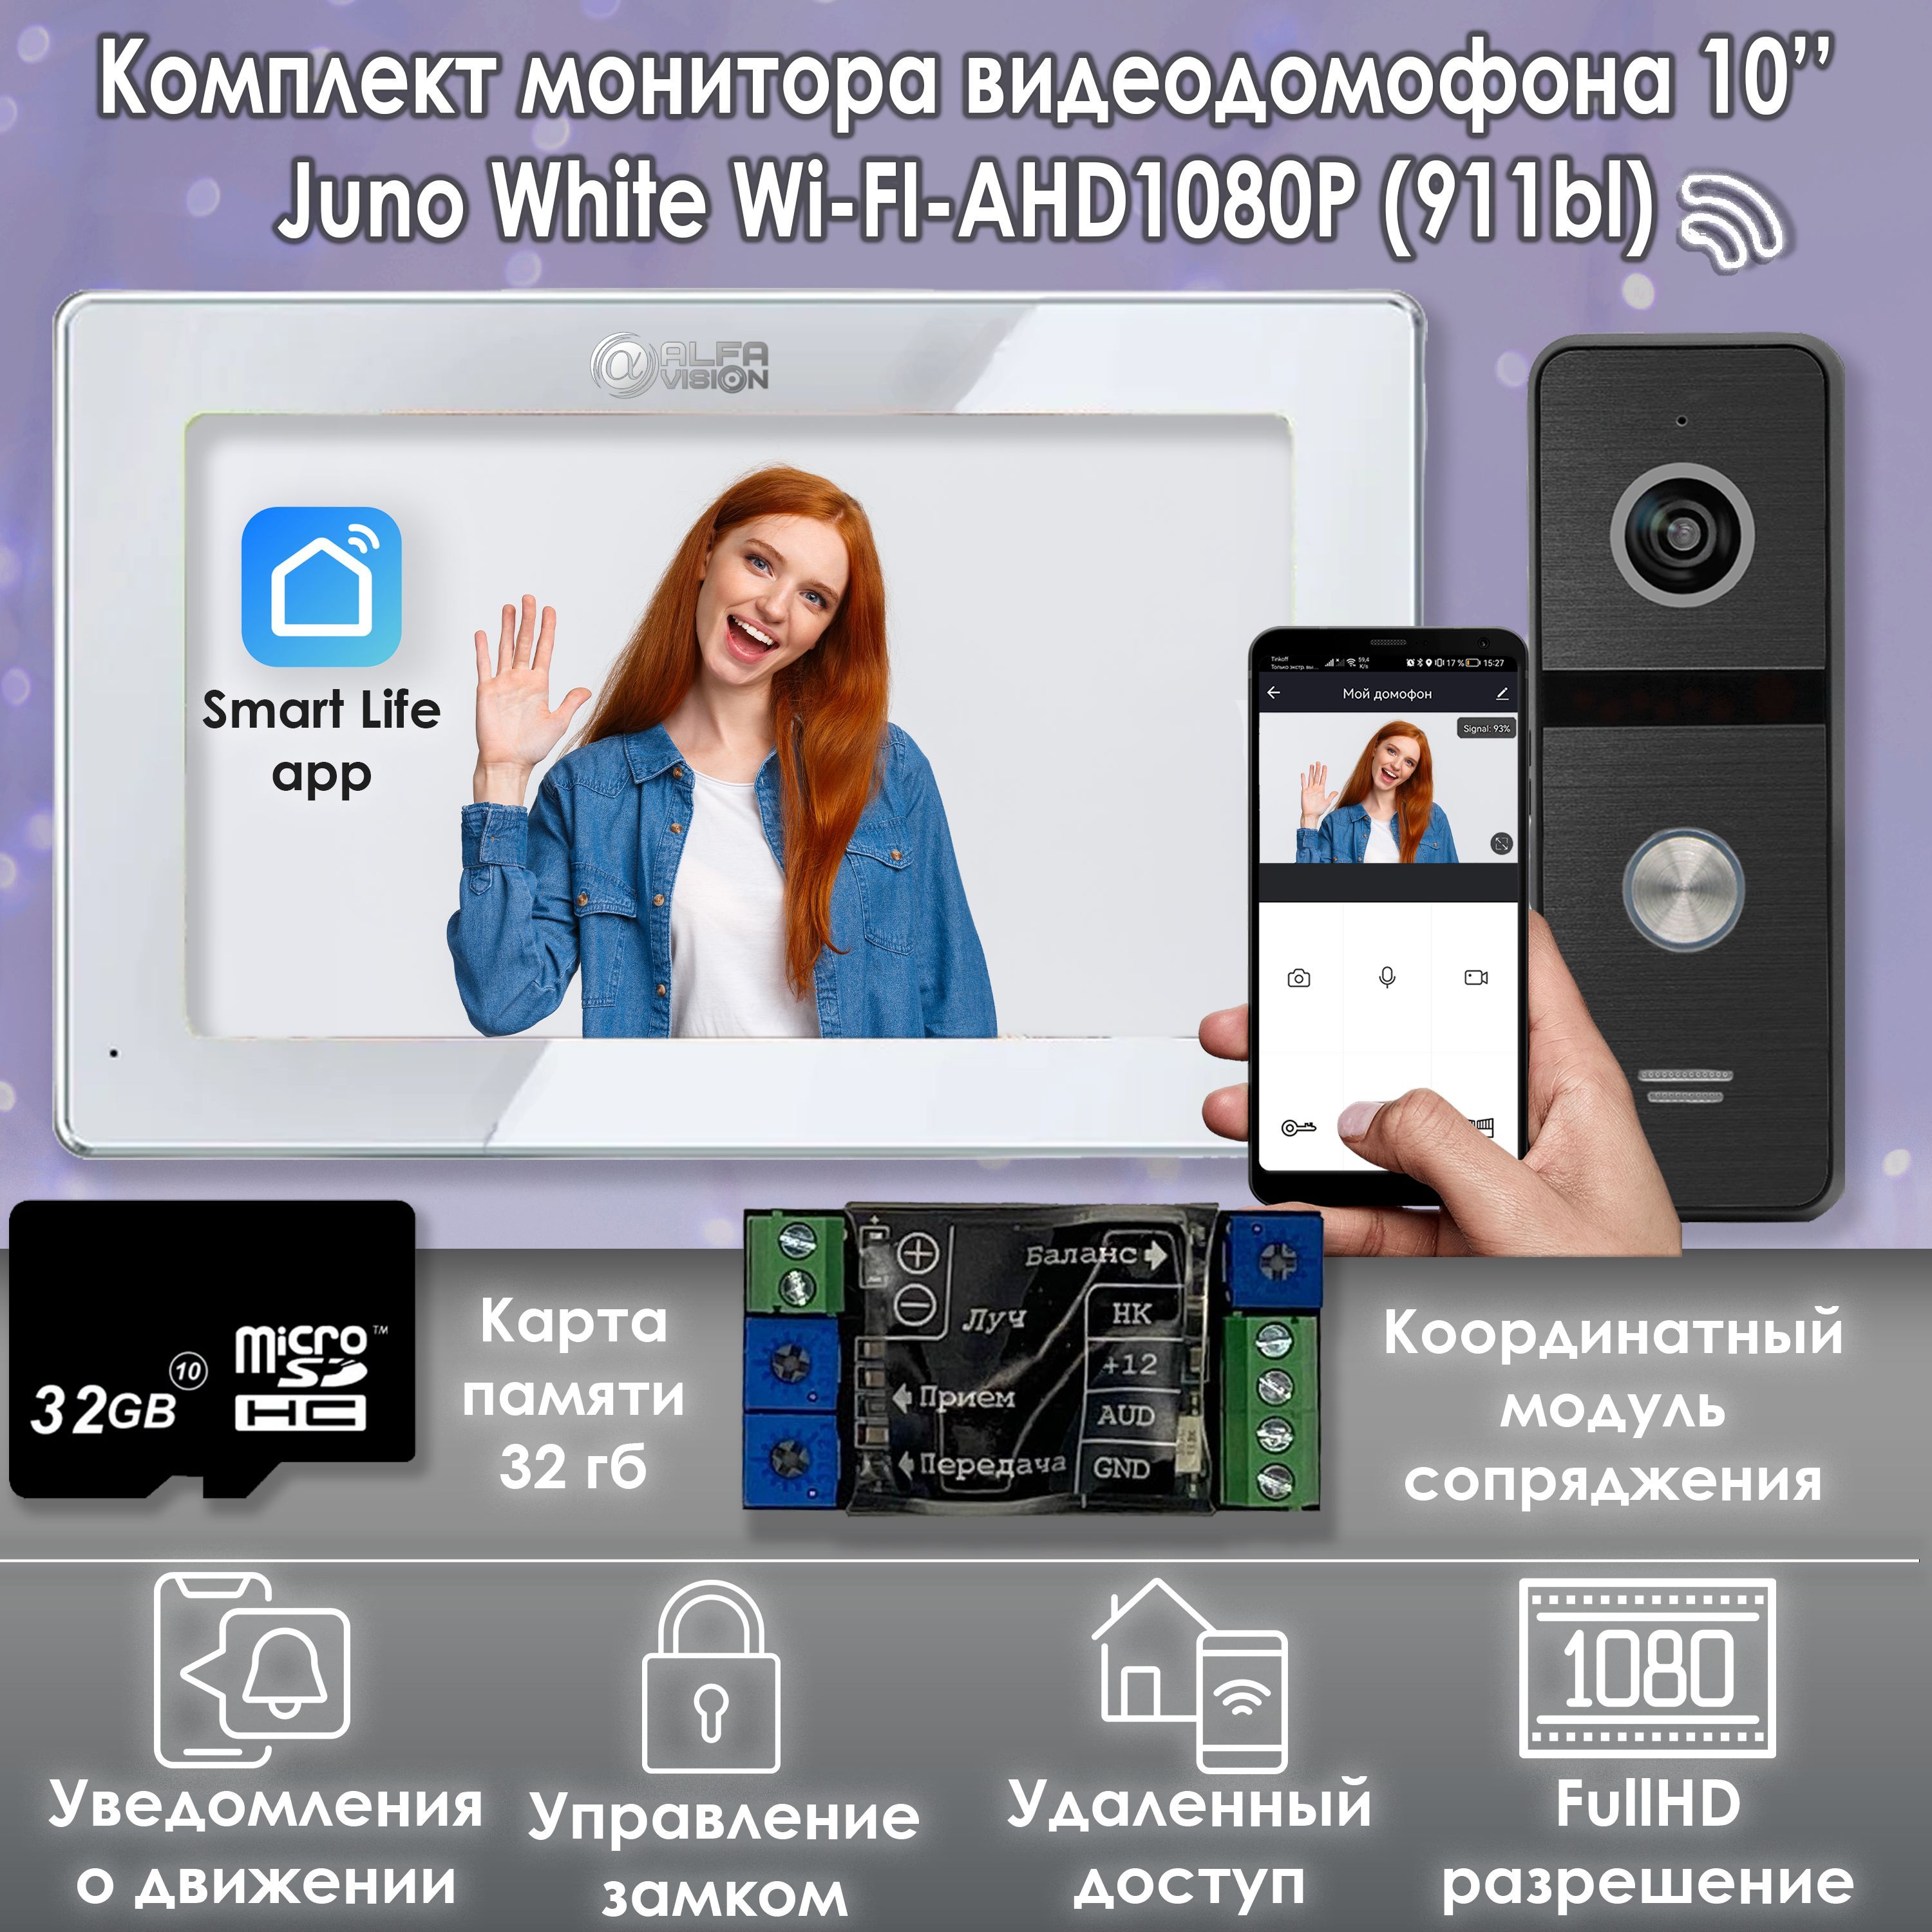 Комплект видеодомофона Alfavision Juno White-KIT Wi-Fi (911bl) + Модуль сопряжения